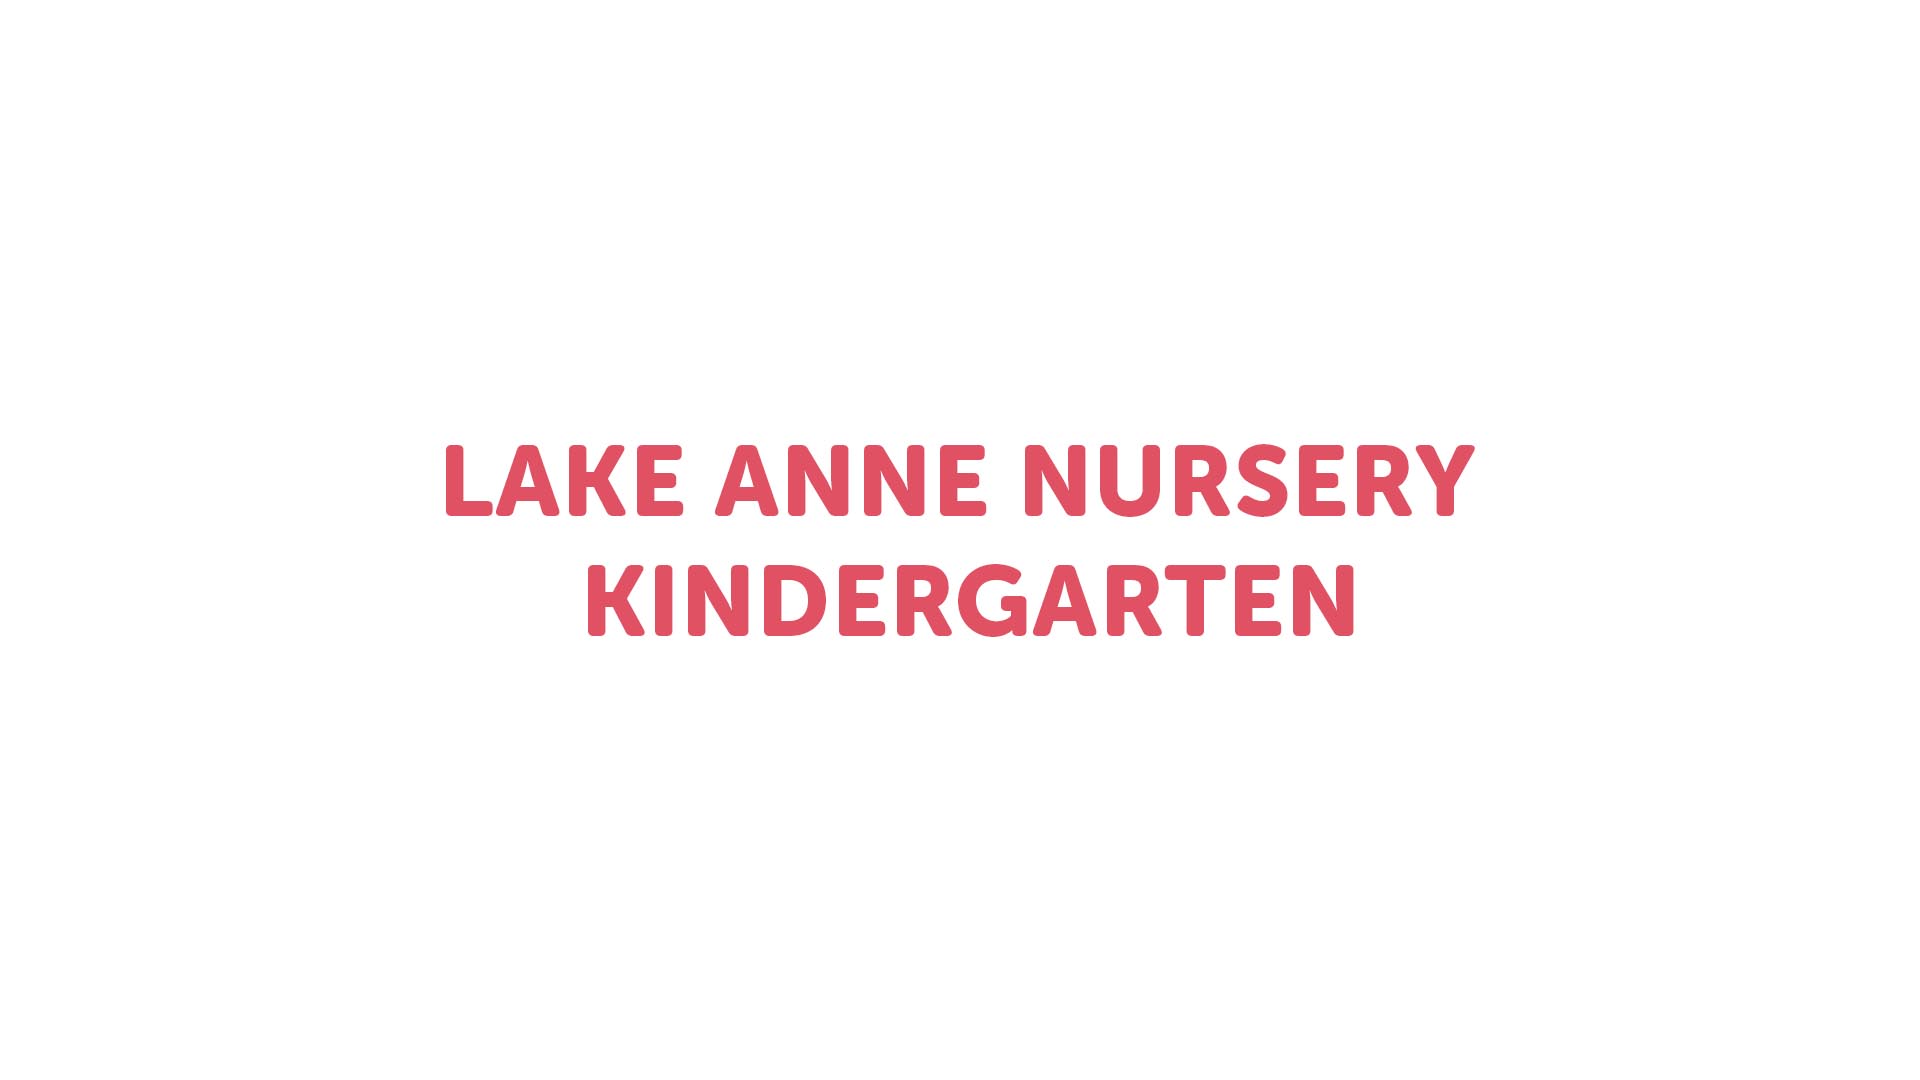 Lake Anne Nursery Kindergarten